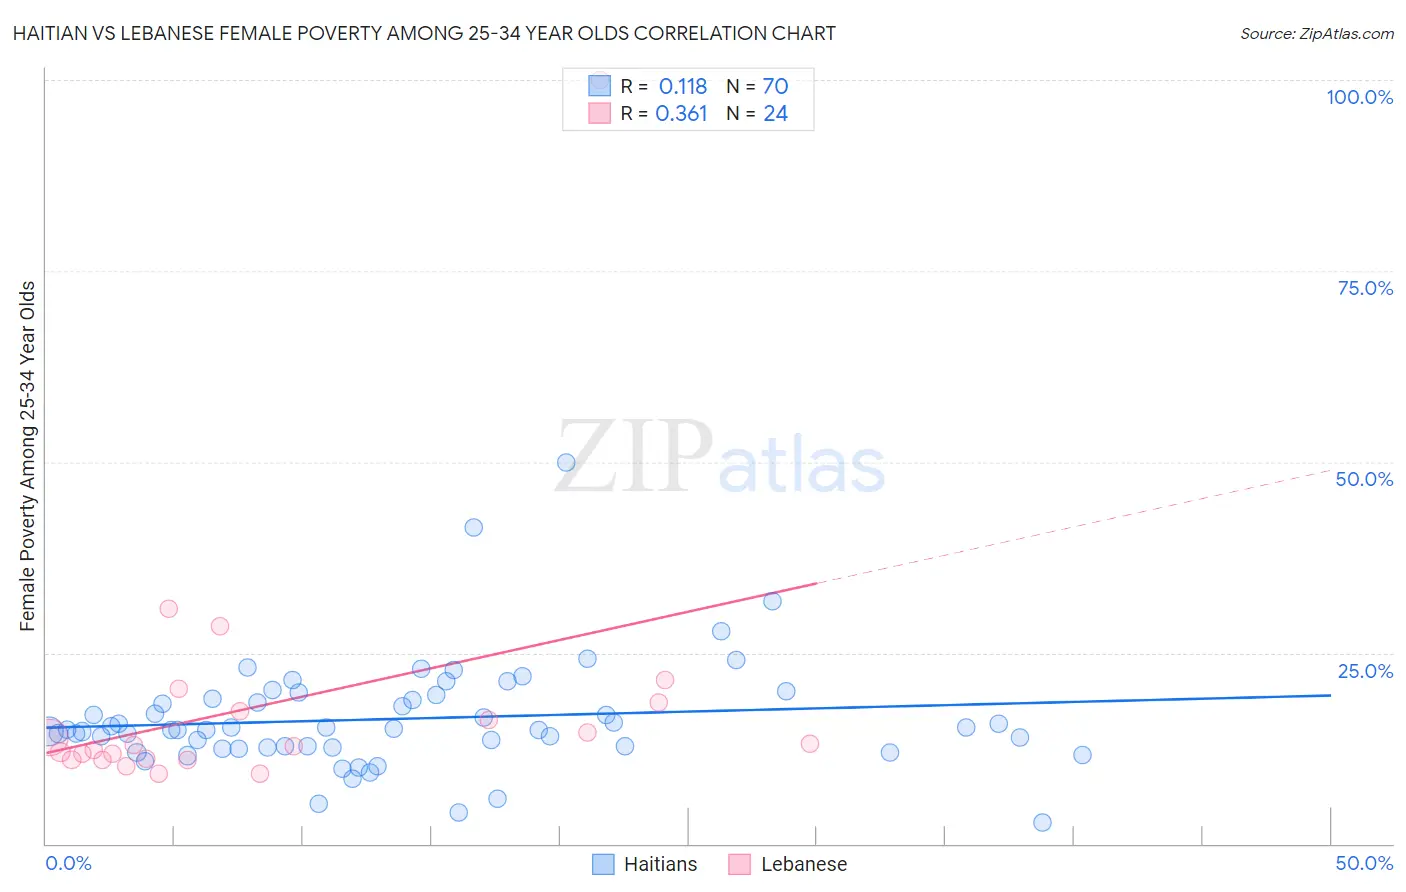 Haitian vs Lebanese Female Poverty Among 25-34 Year Olds